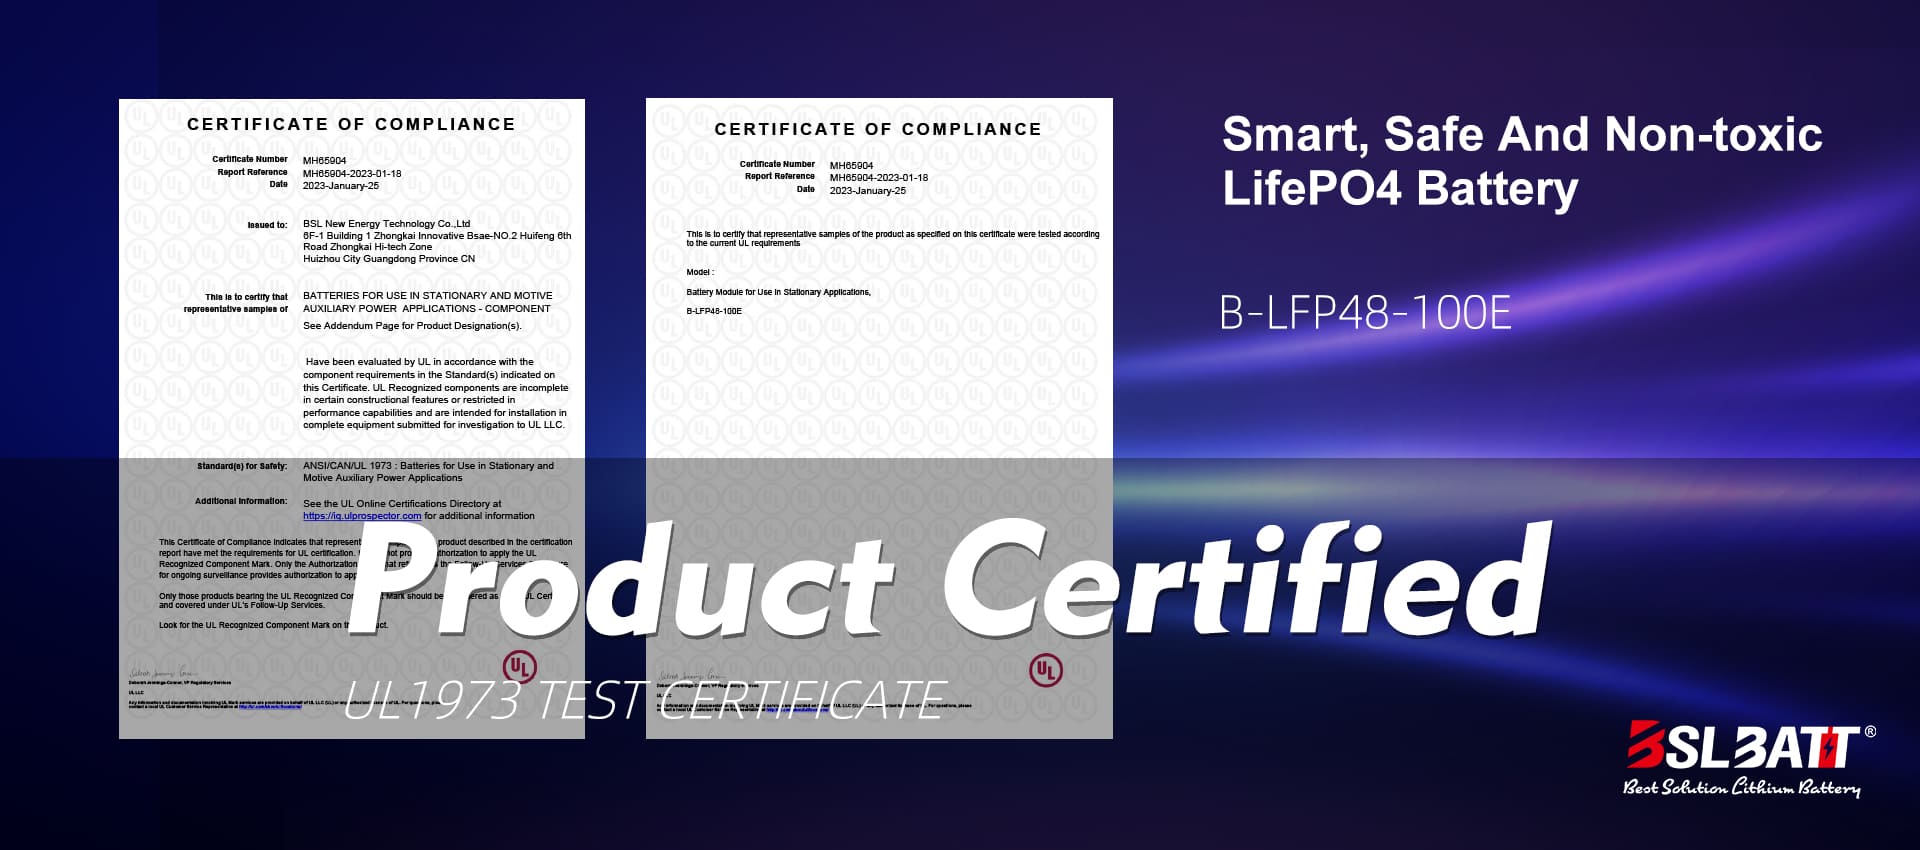 BSLBATT Lithium ion Battery 48V 100Ah is UL 1973 Certified